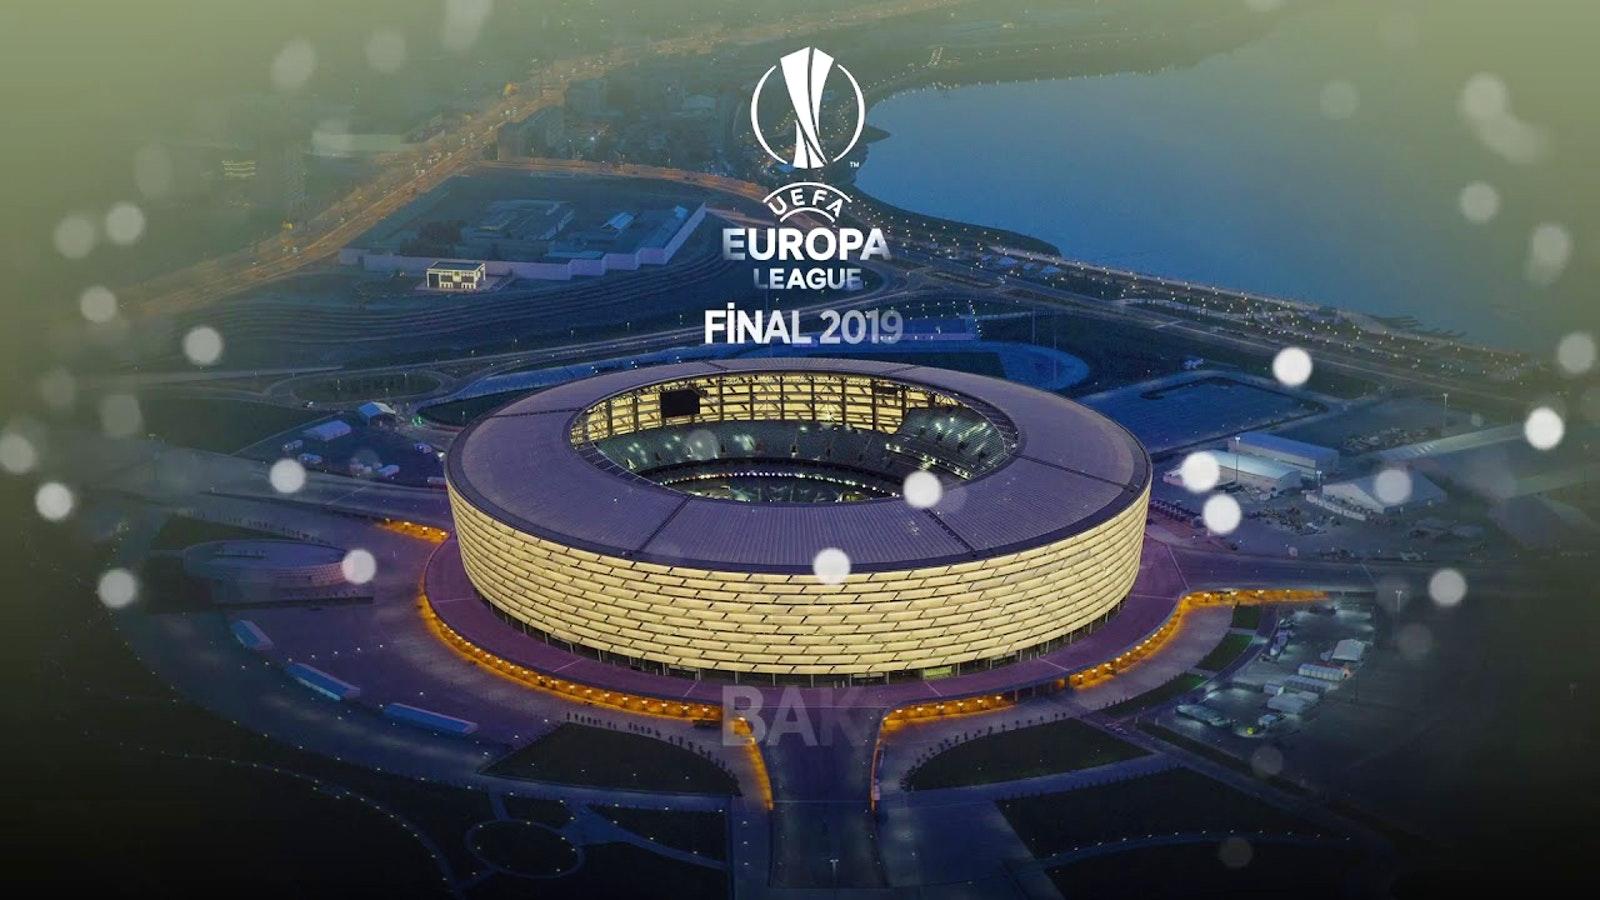 Europa League 2019 Wallpaper